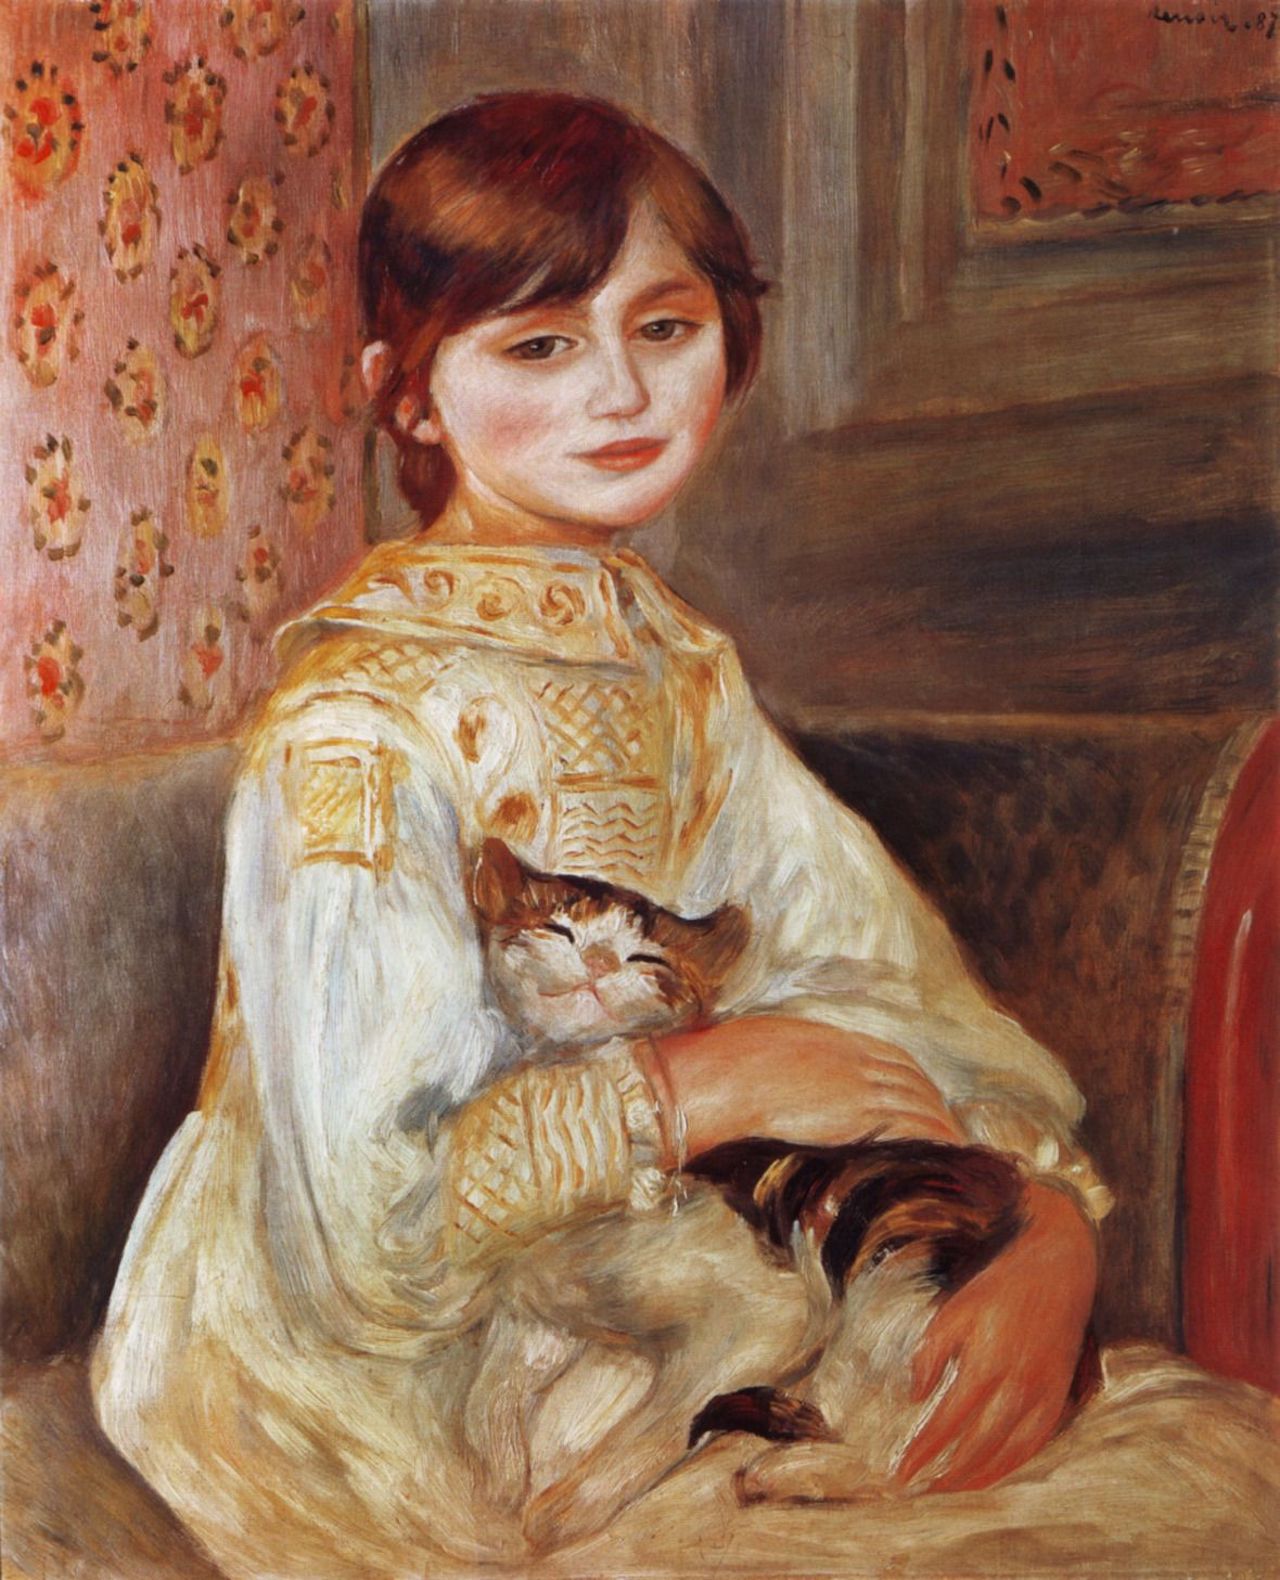 Child With Cat by Pierre-Auguste Renoir - 1887 - 54 x 65 cm Musée d'Orsay